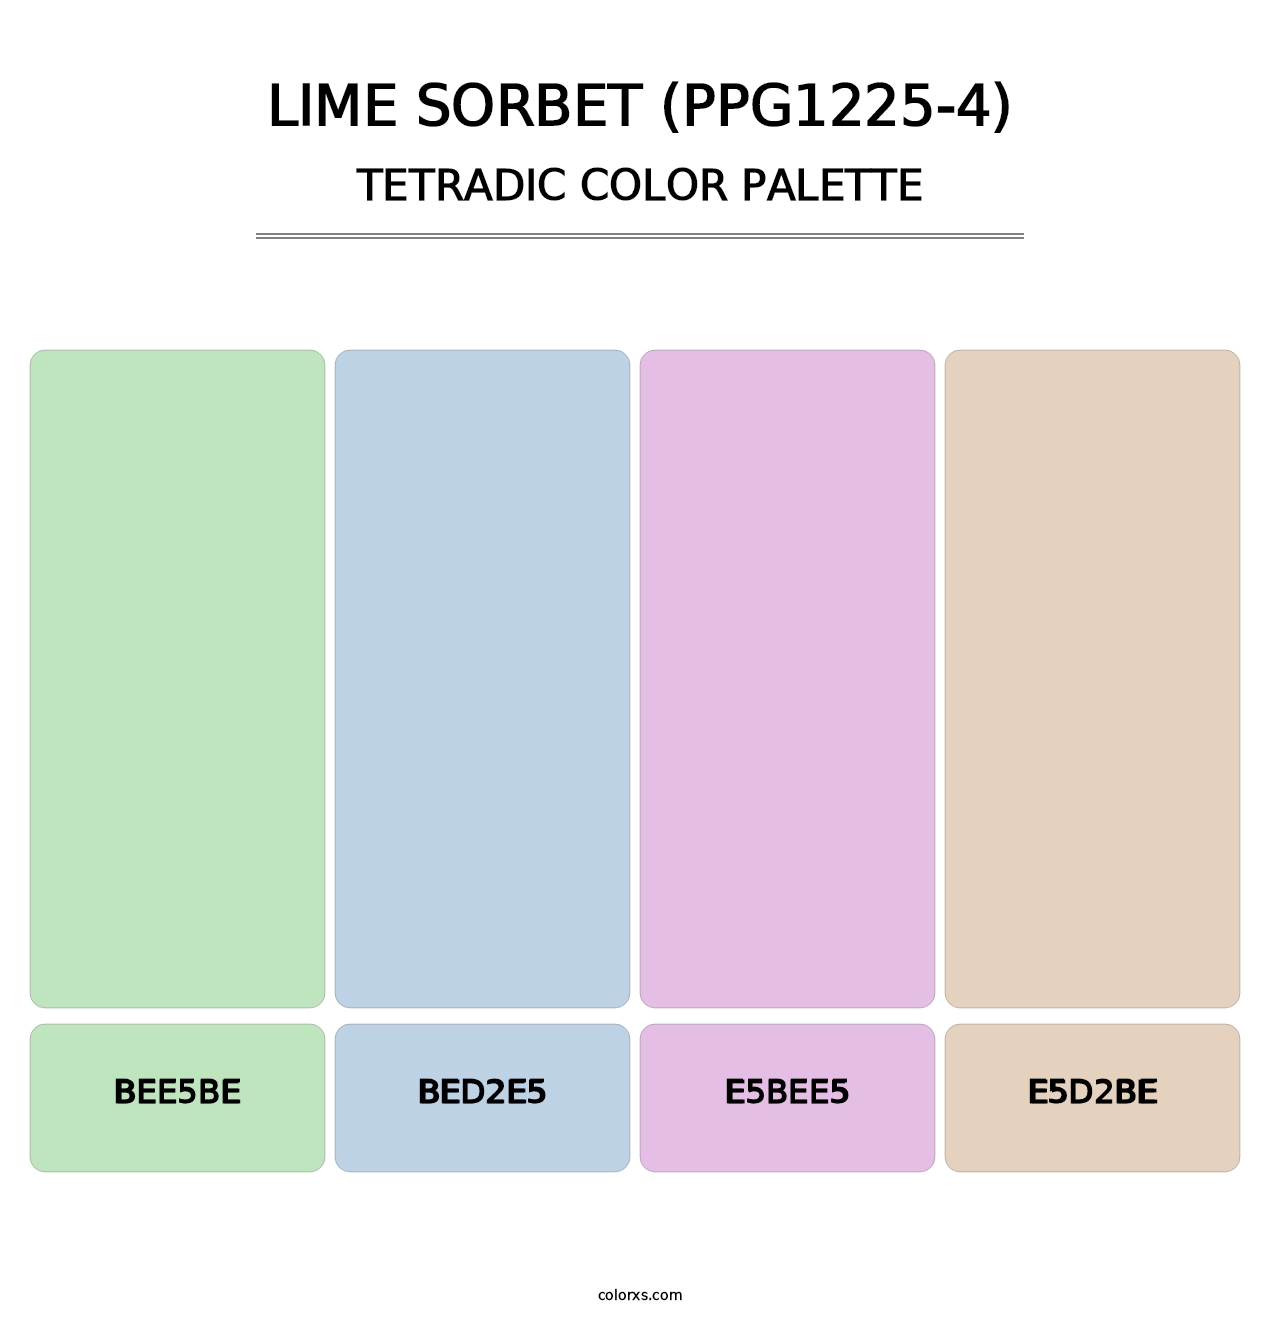 Lime Sorbet (PPG1225-4) - Tetradic Color Palette